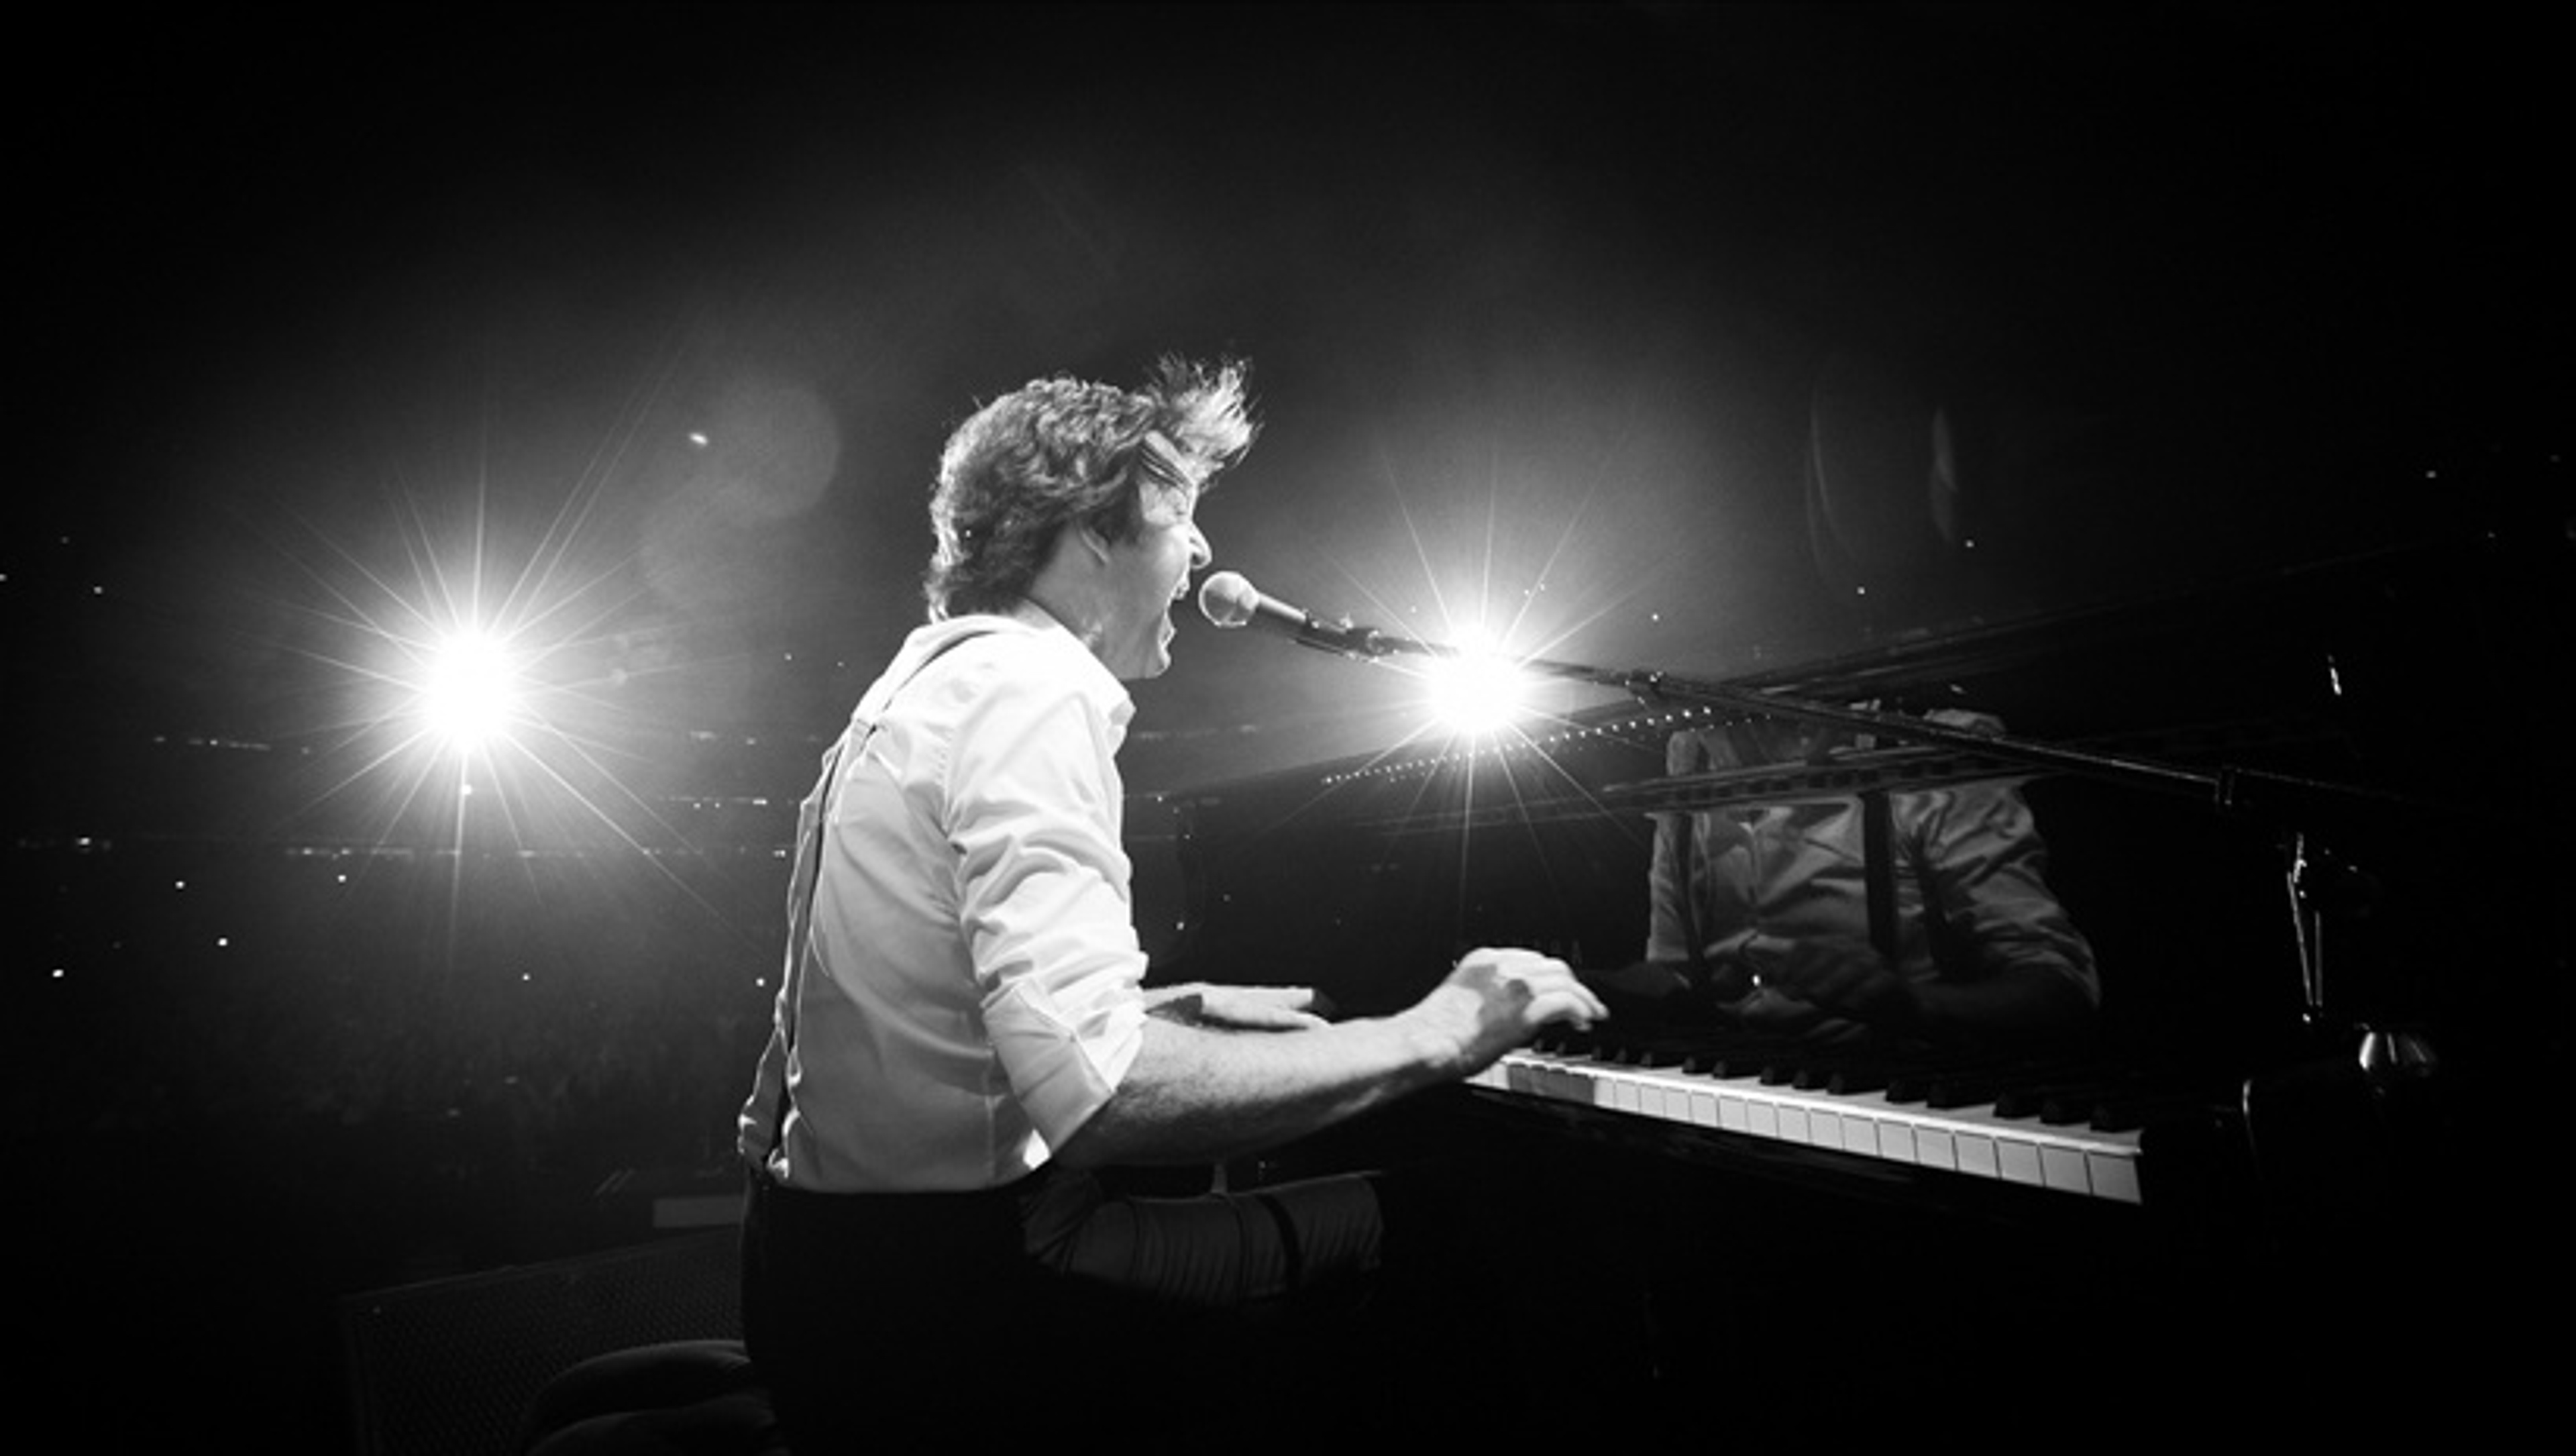 Paul kicks off his 'On The Run' tour at Yankee Stadium, NYC, 15-Jul-11